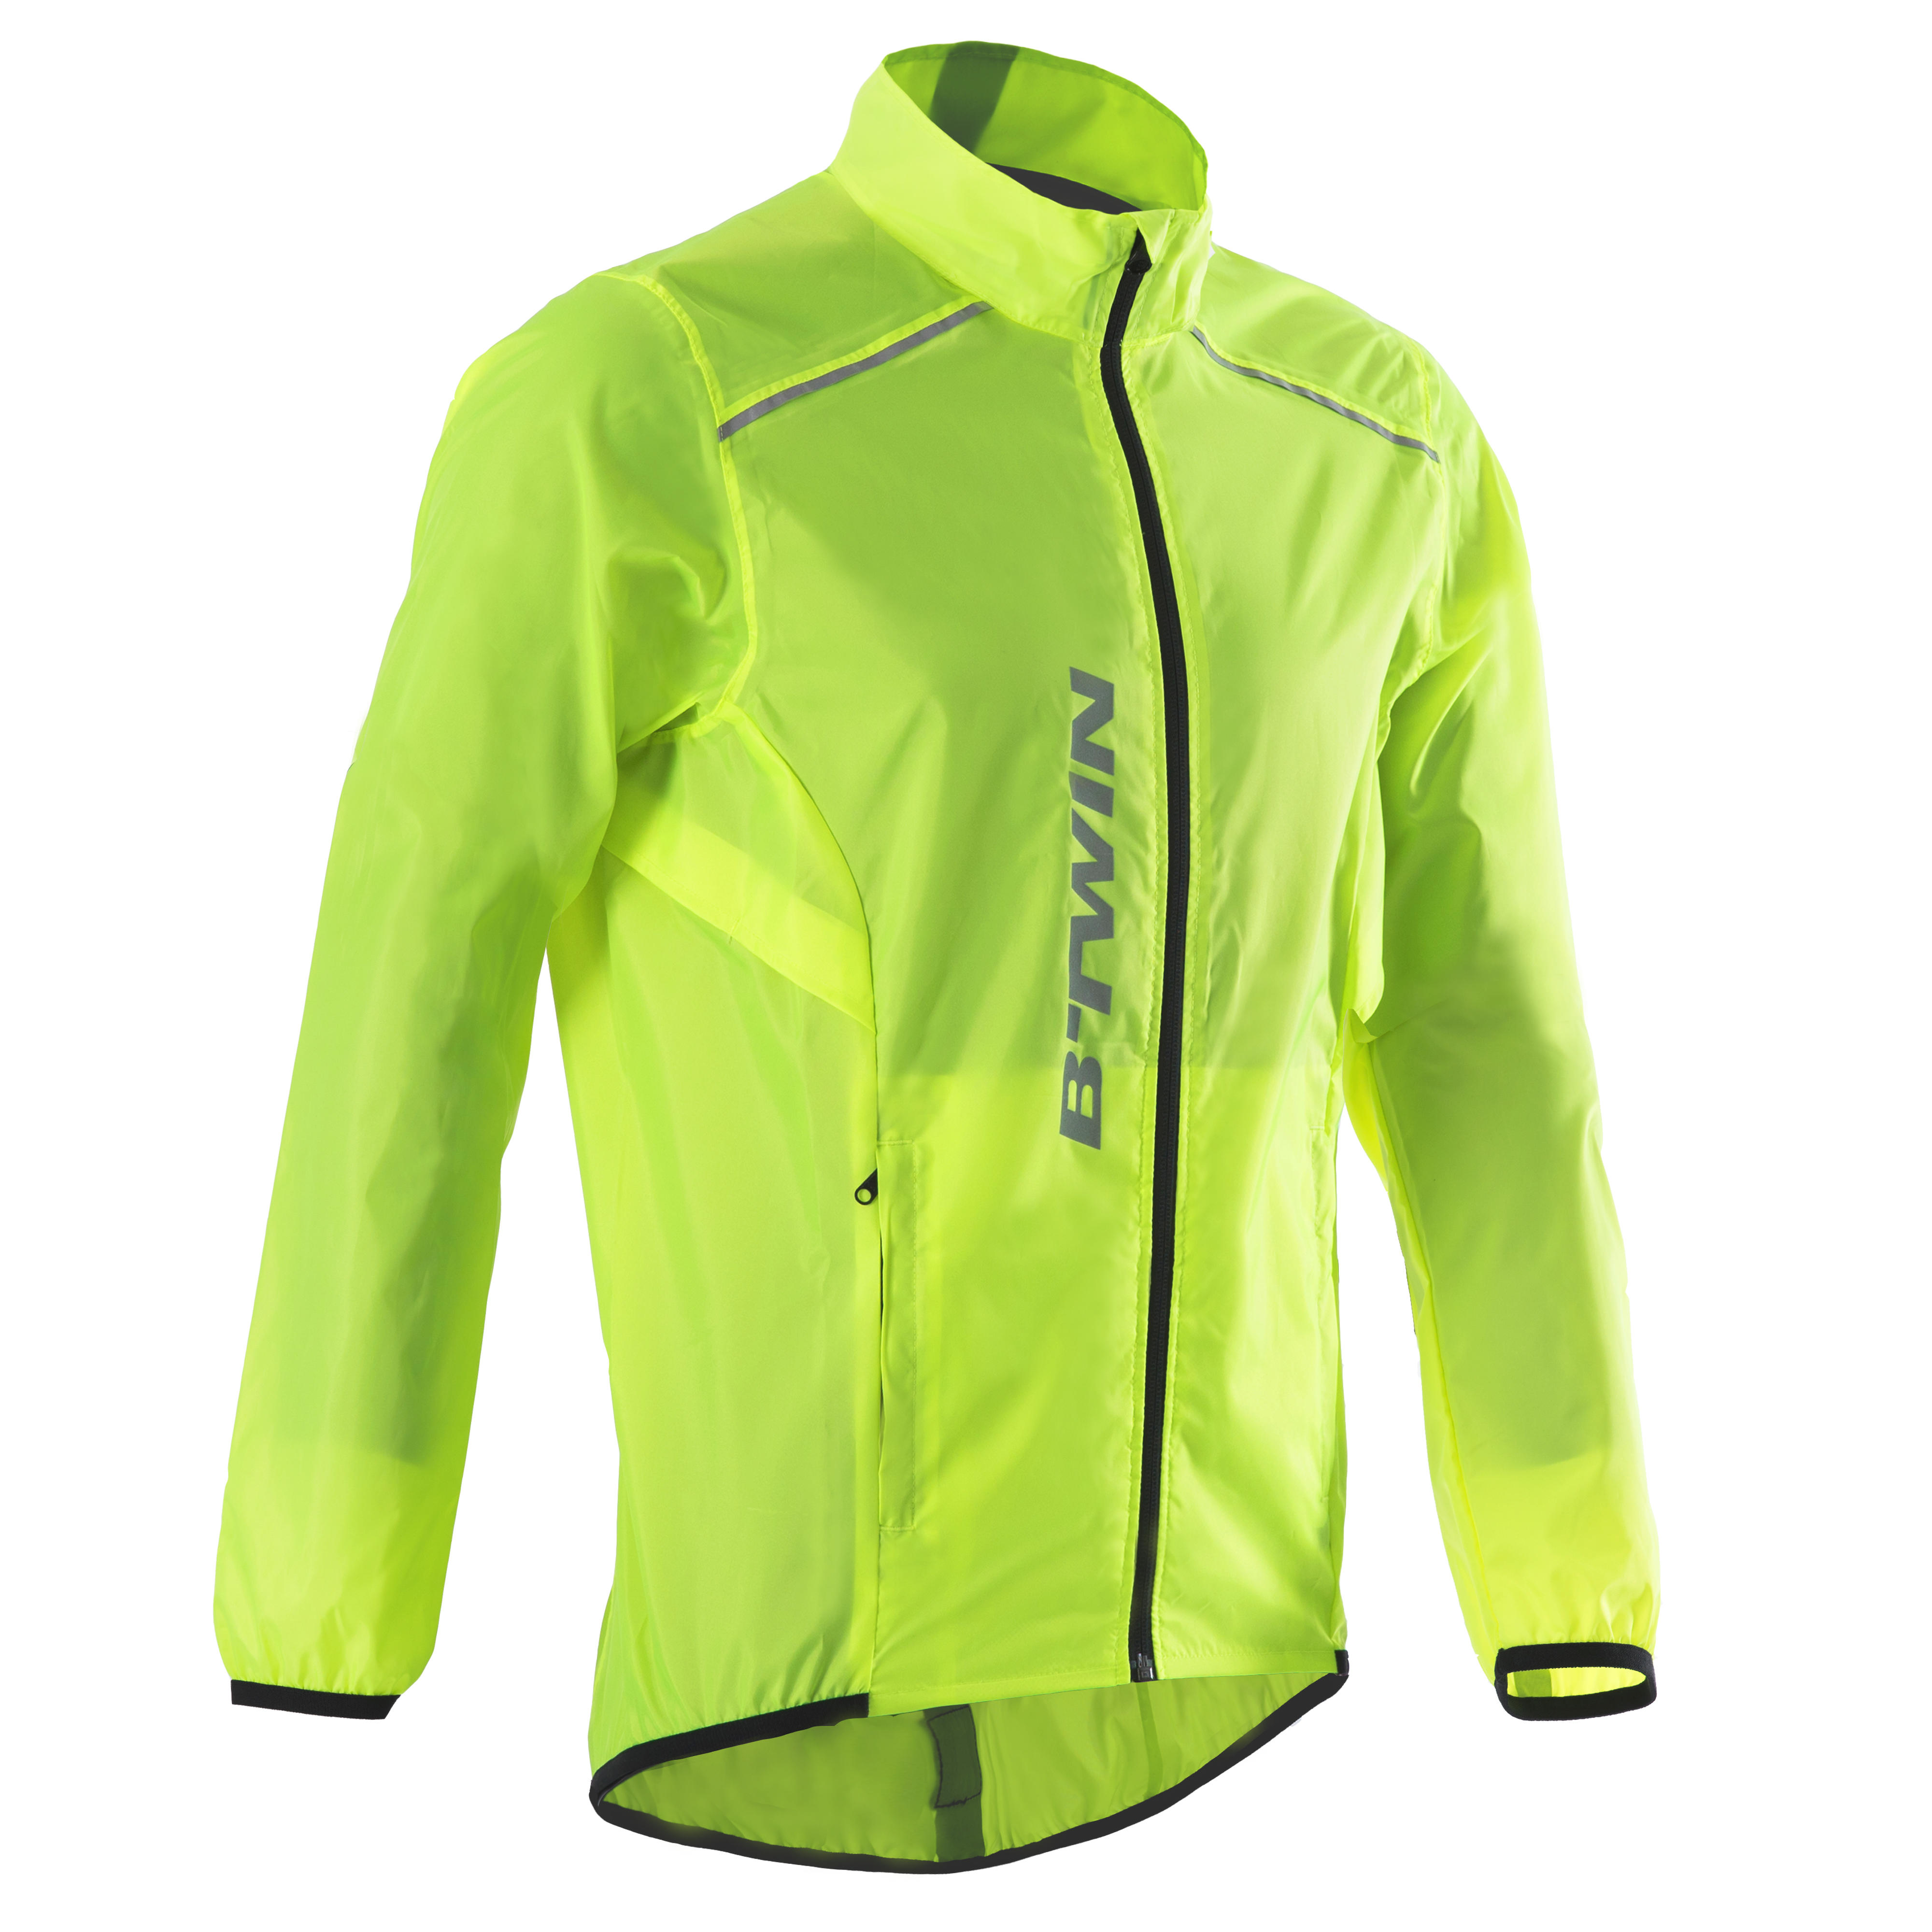 decathlon rain jacket cycling